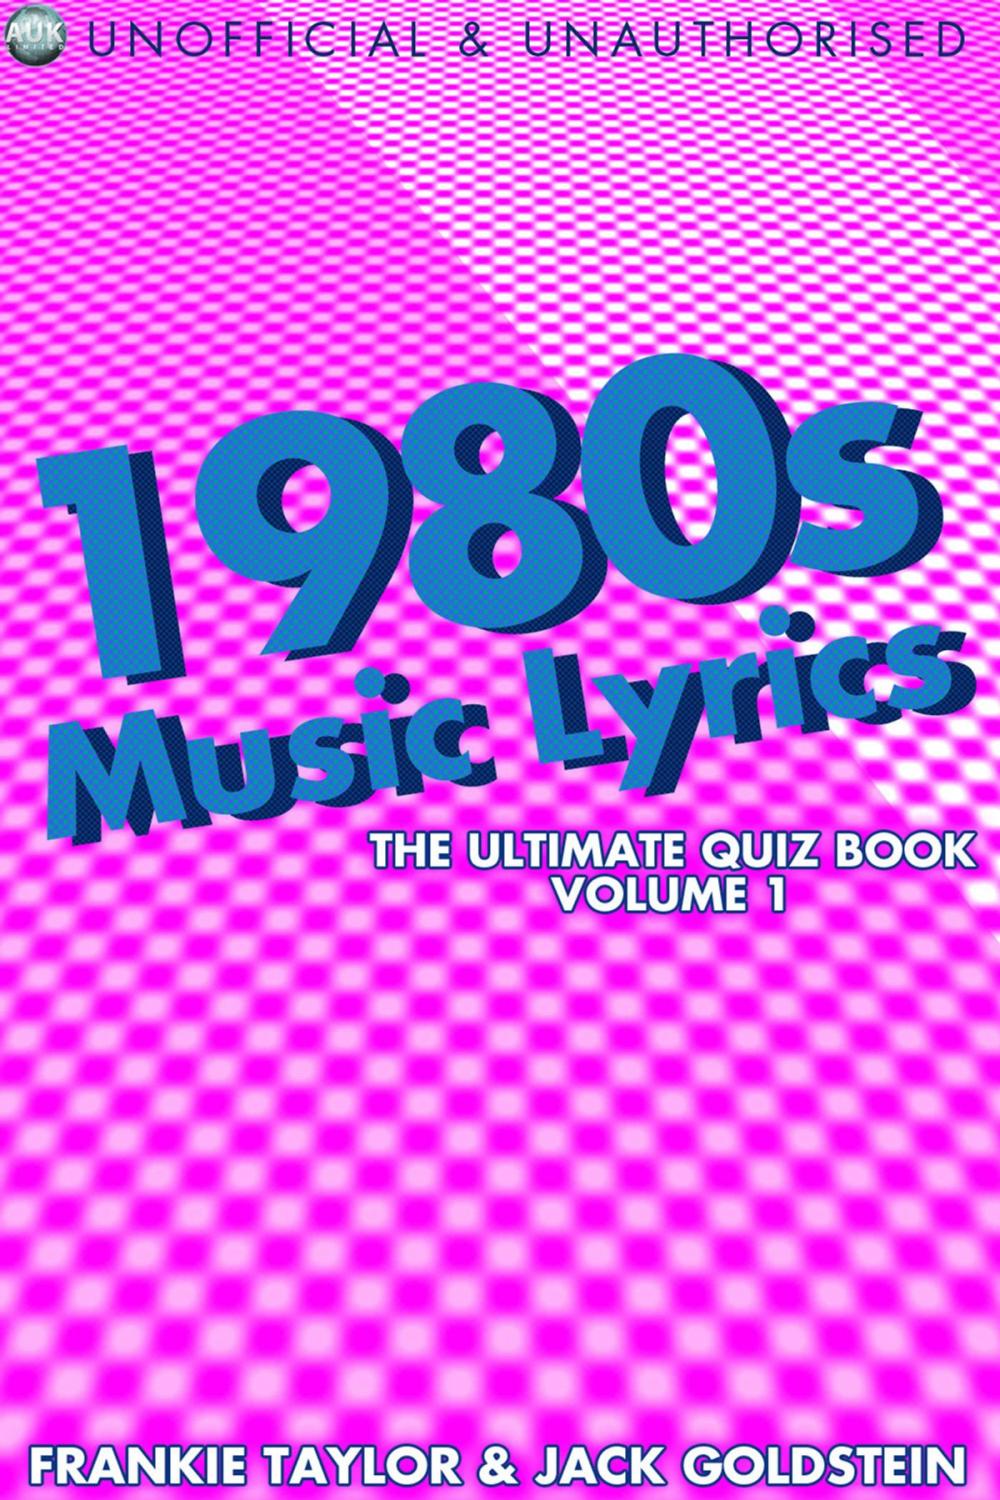 Big bigCover of 1980s Music Lyrics: The Ultimate Quiz Book - Volume 1